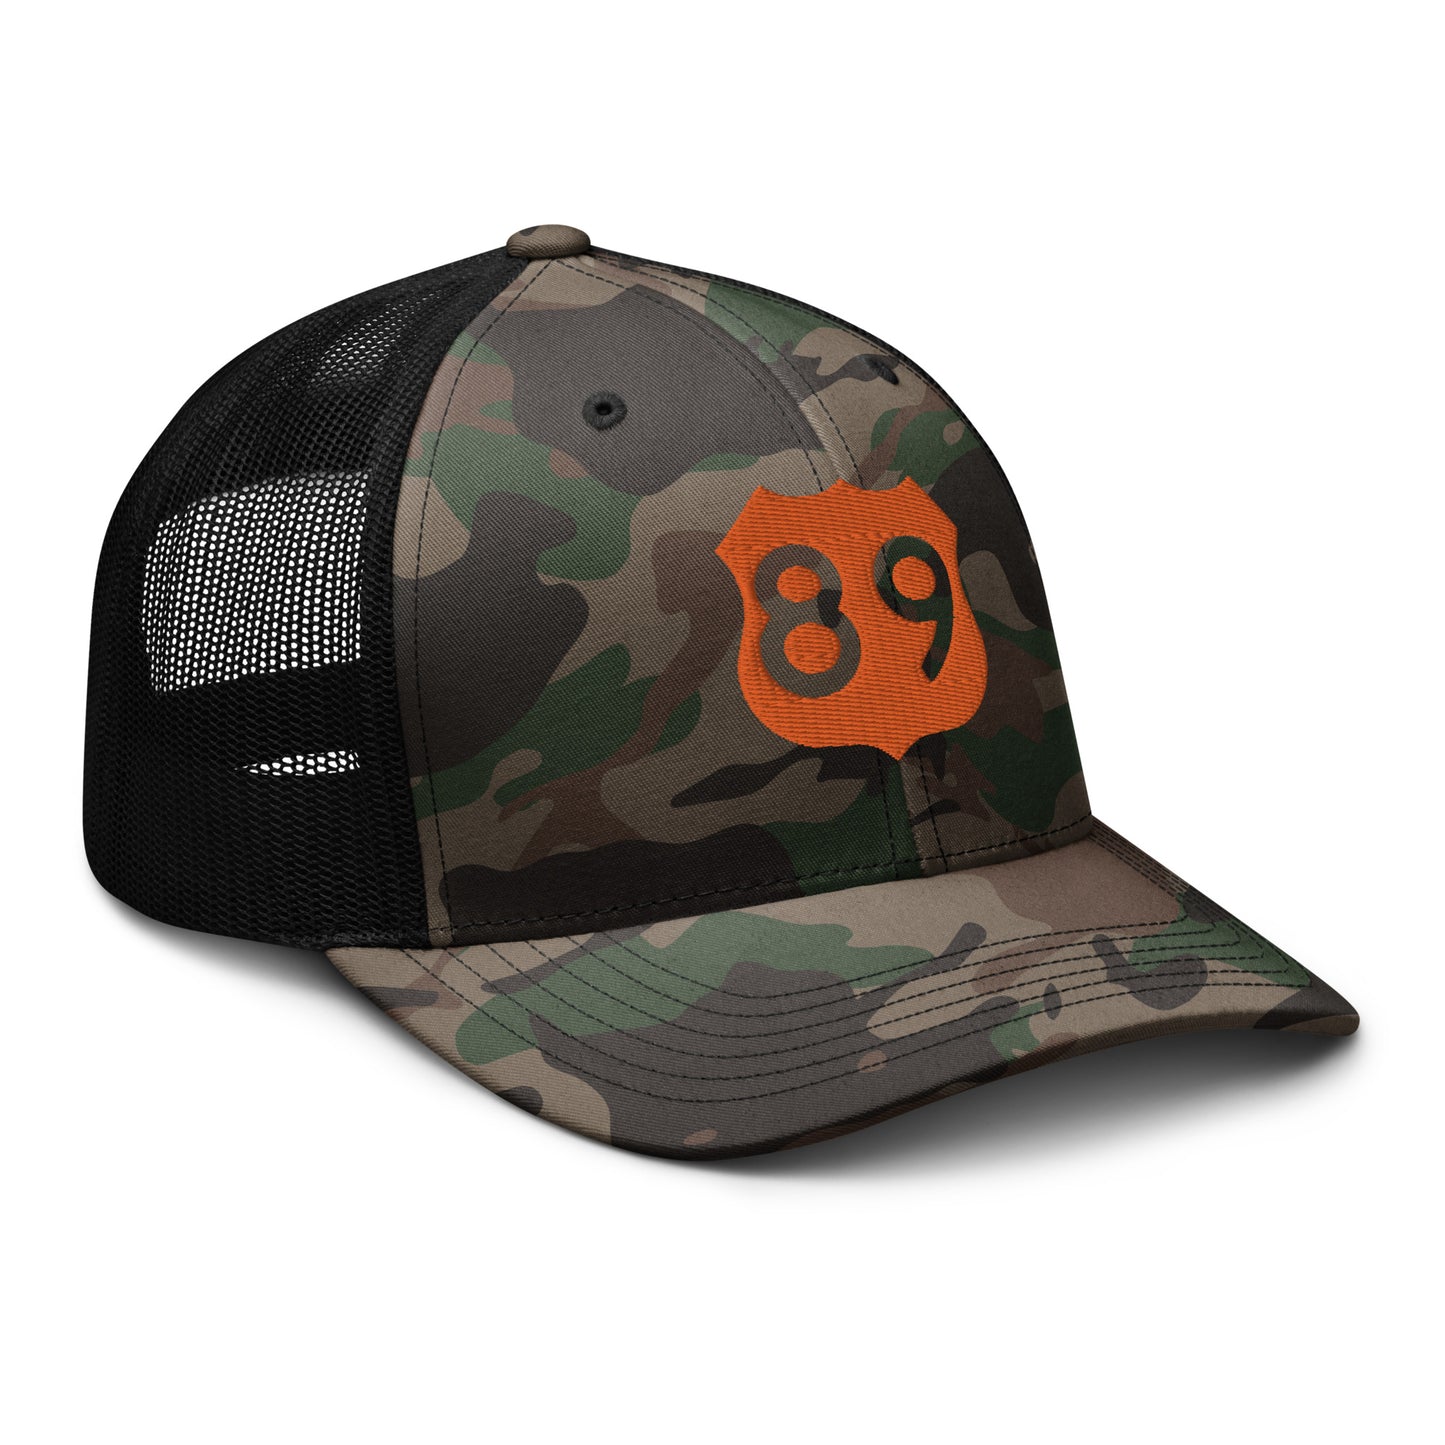 Camo/Orange 89 Trucker Hat